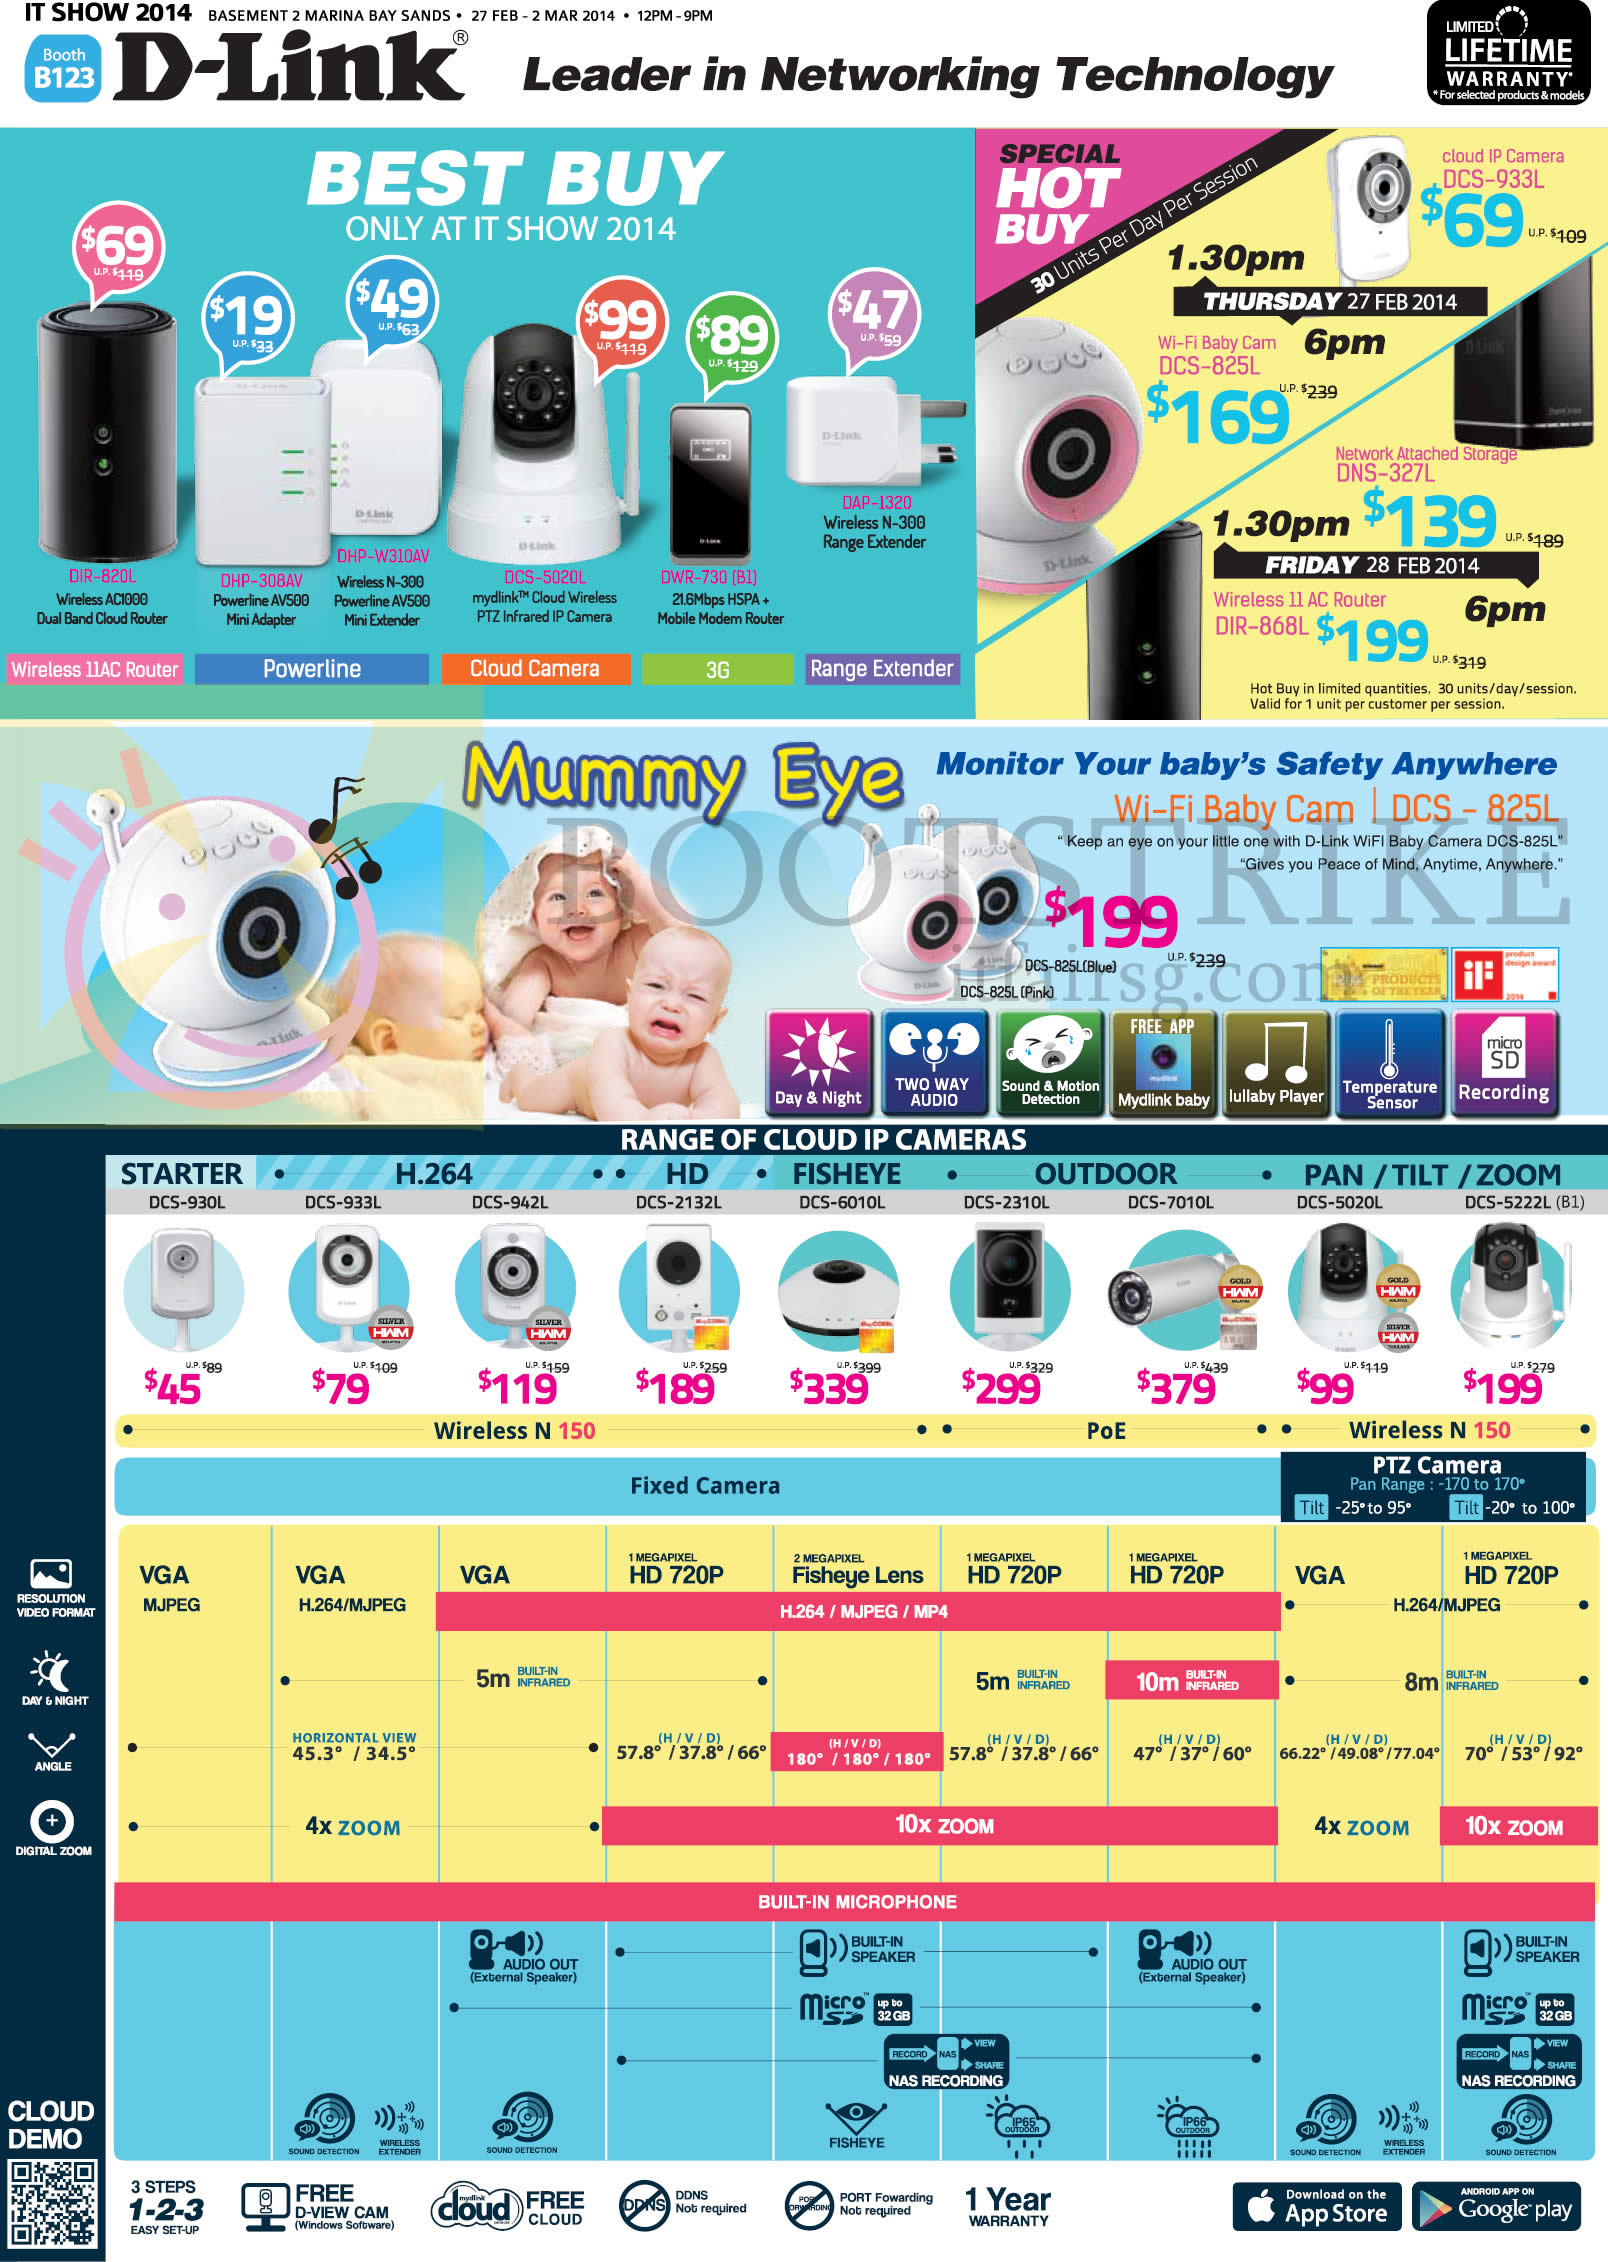 IT SHOW 2014 price list image brochure of D-Link Networking Cloud Cameras DCS-942L, 2132L, 6010L, 2310L, 7010L, 5020L, 5222L